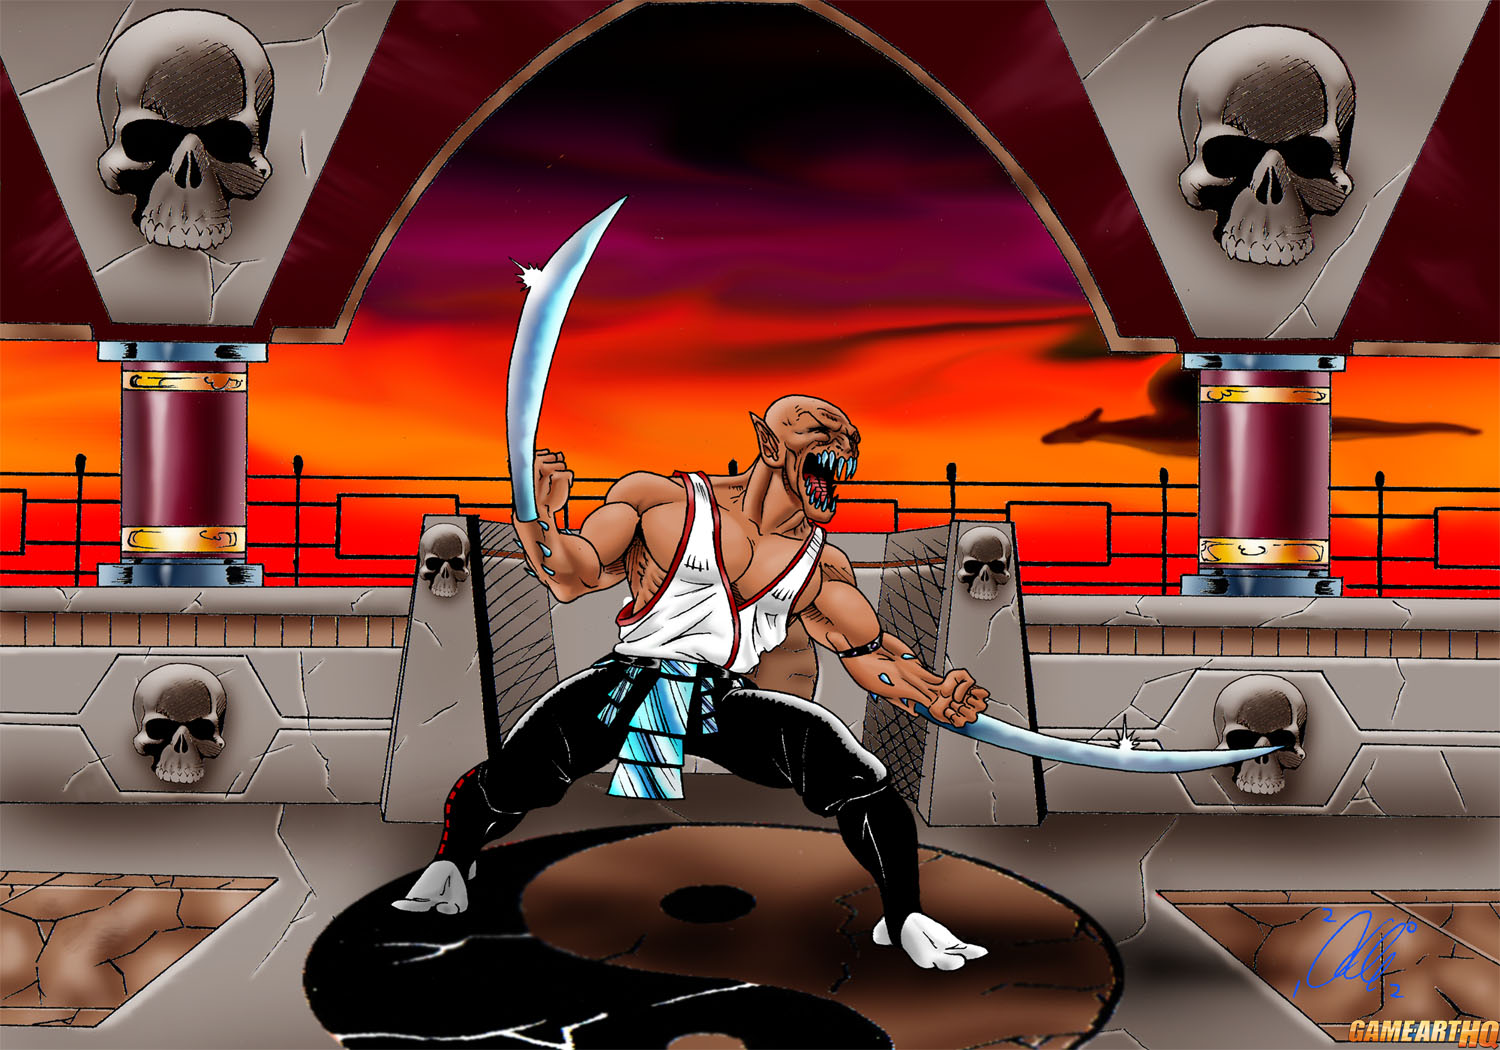 MK Tribute: Baraka from Mortal Kombat II